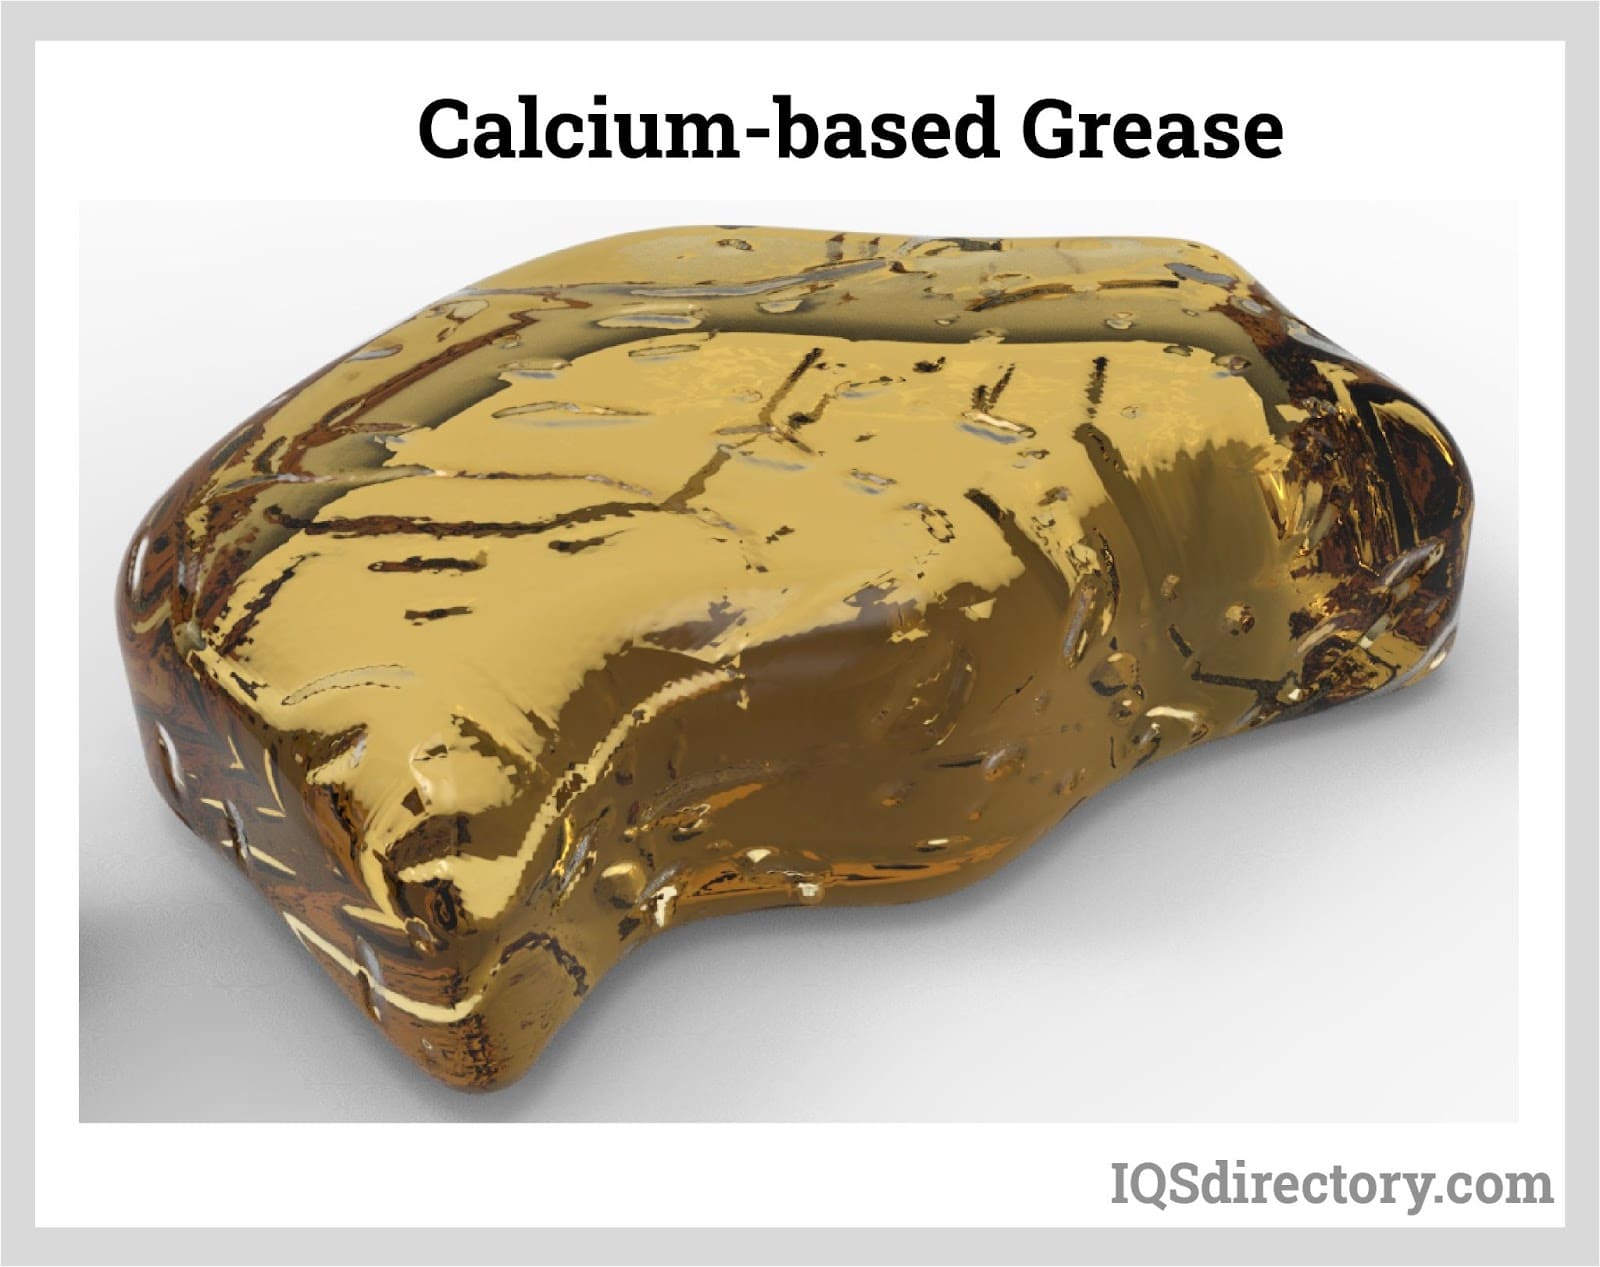 Calcium-based Grease